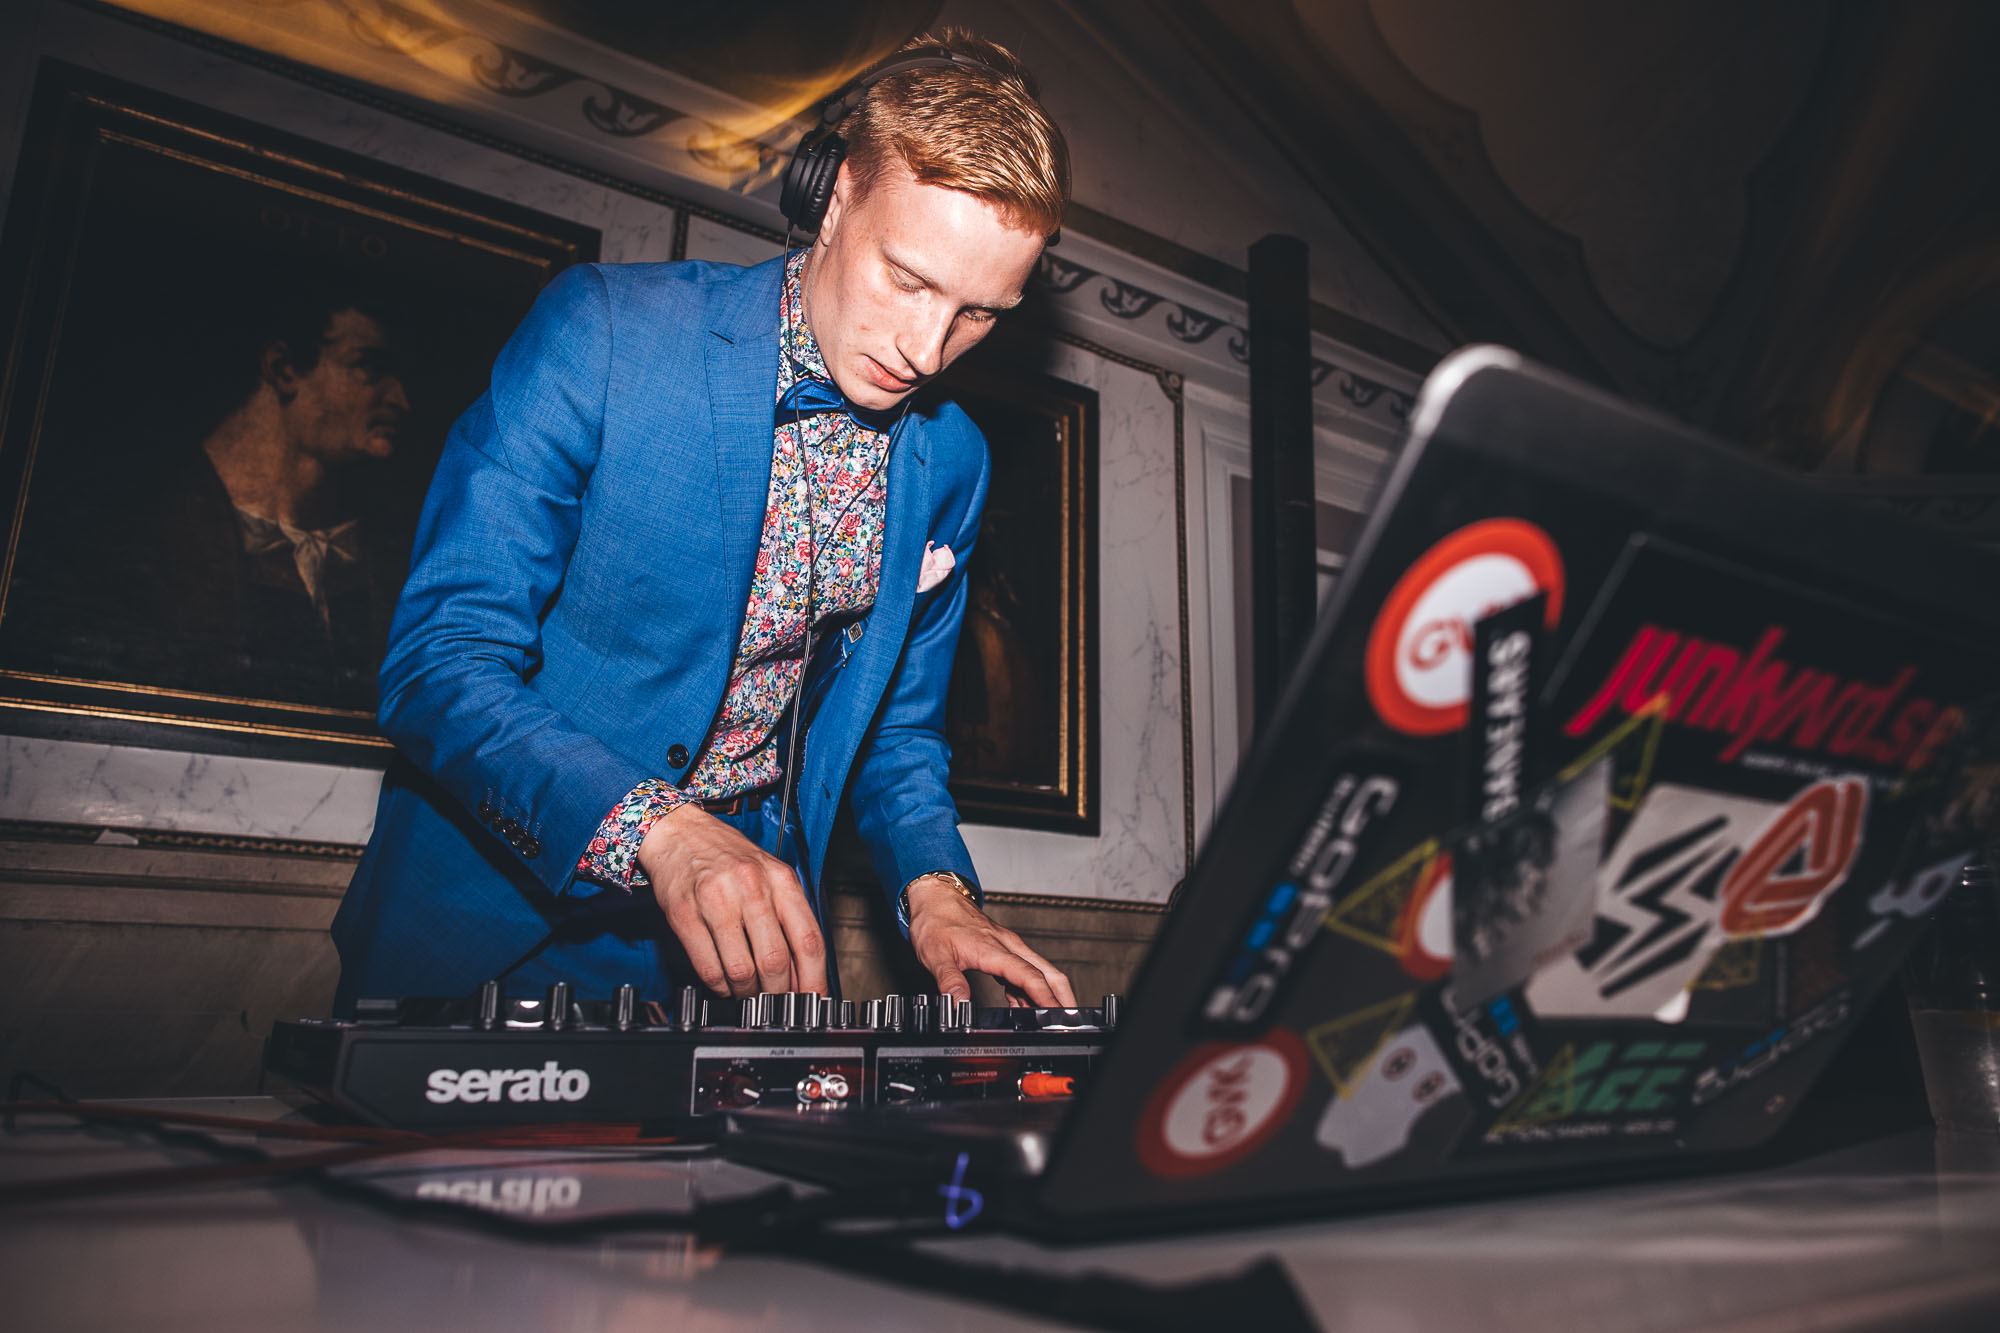 DJ behind his laptop